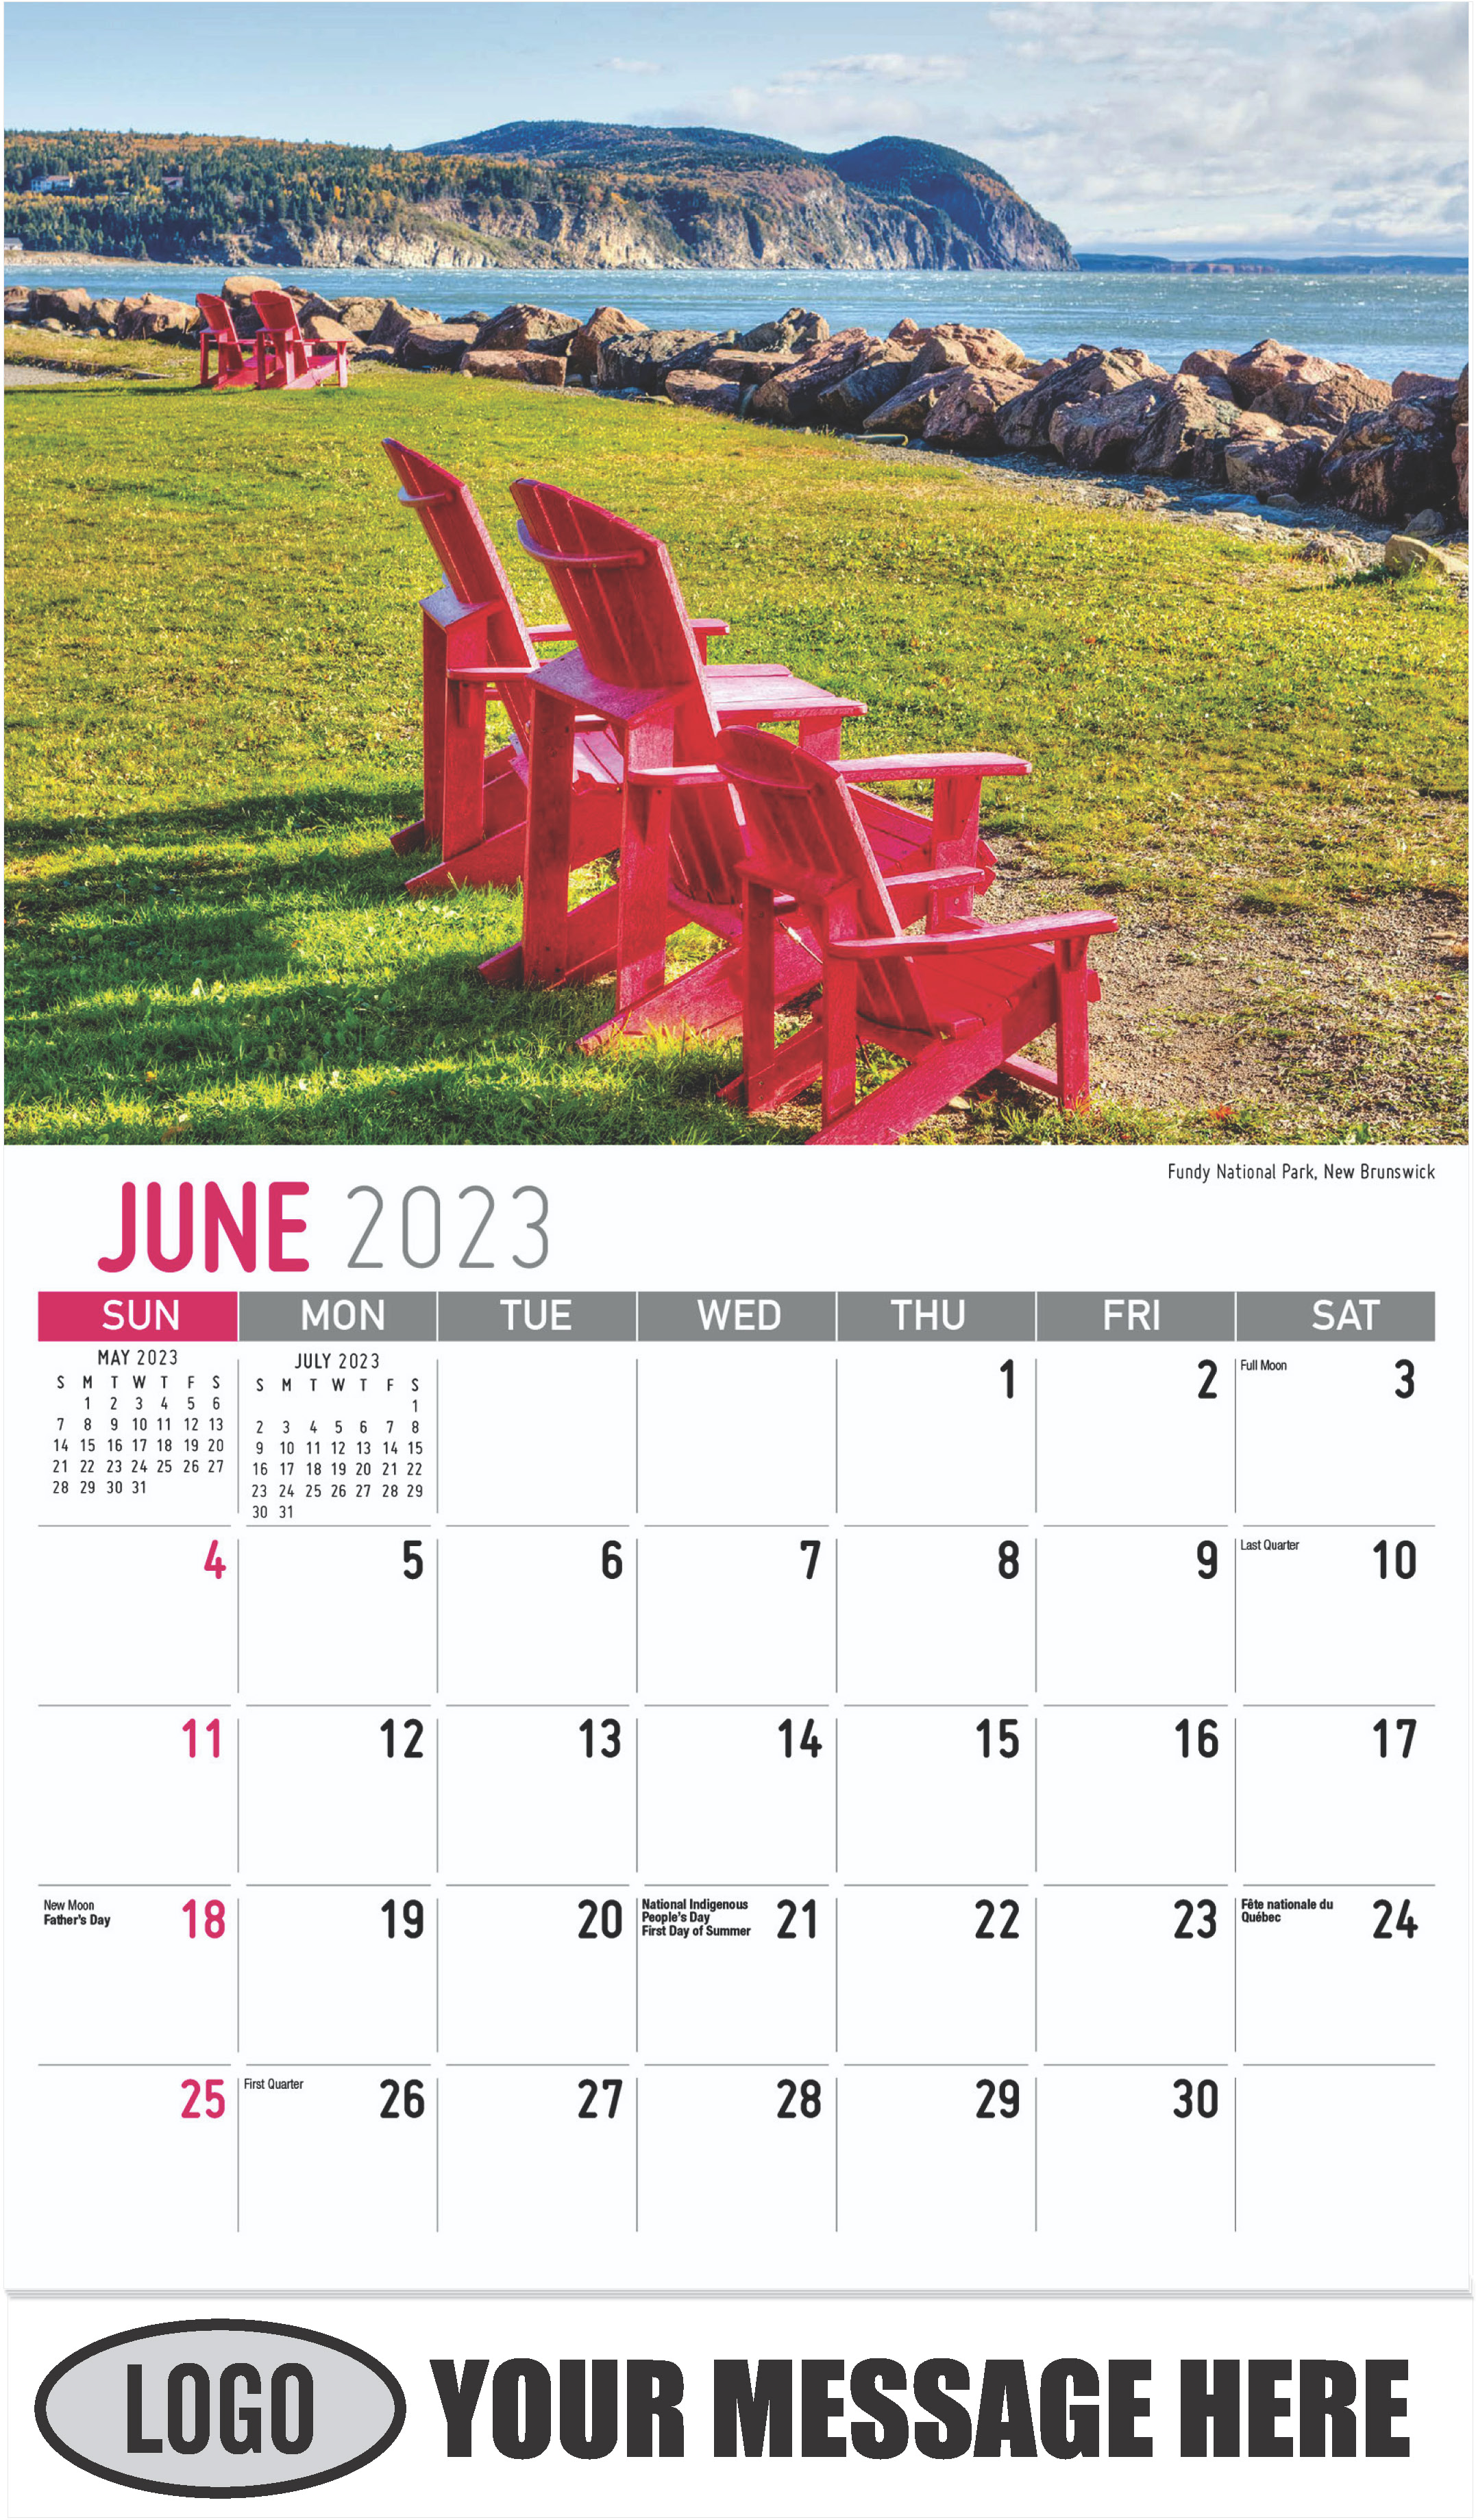 Fundy National Pak, New Brunswick - June - Atlantic Canada 2023 Promotional Calendar